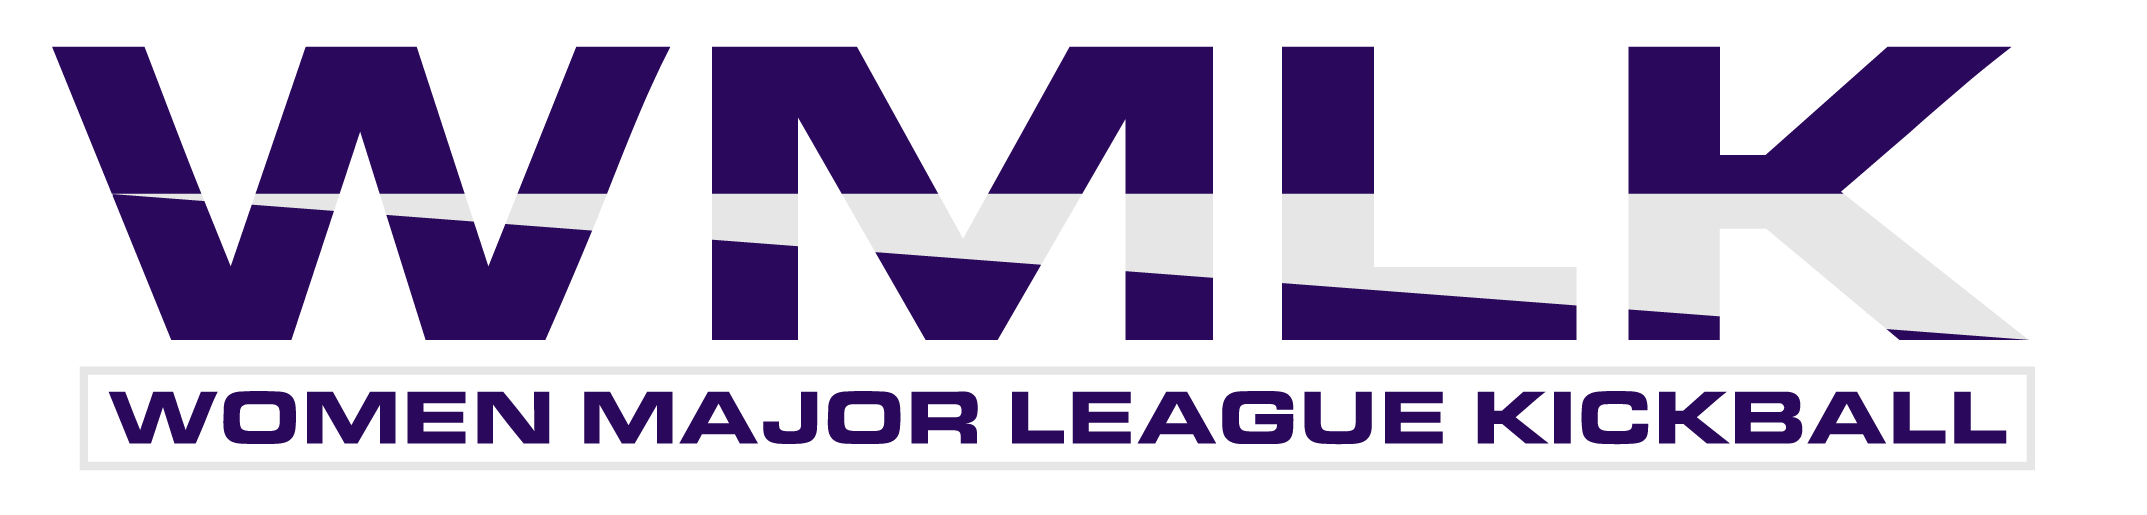 Women Major League Kickball Official Site